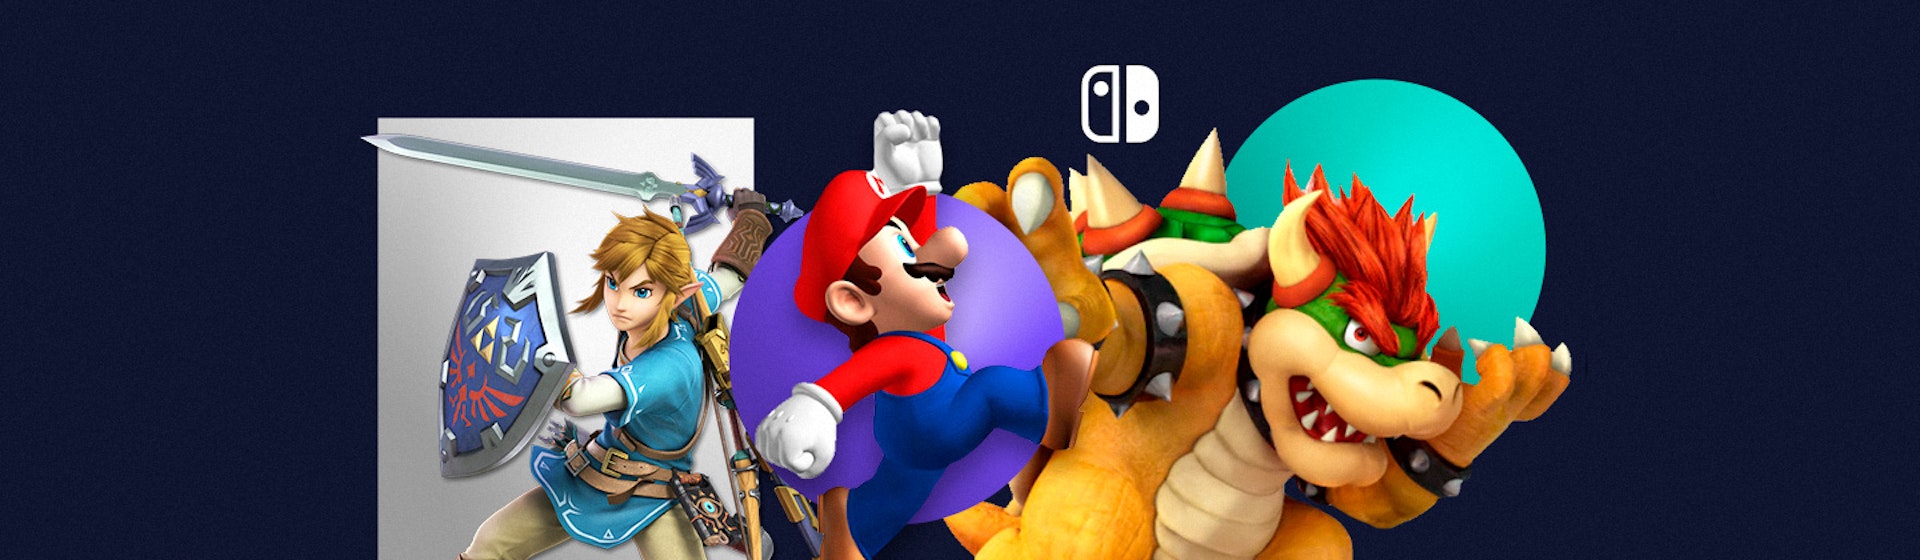 50 juegos de Nintendo Switch para divertirte como nunca